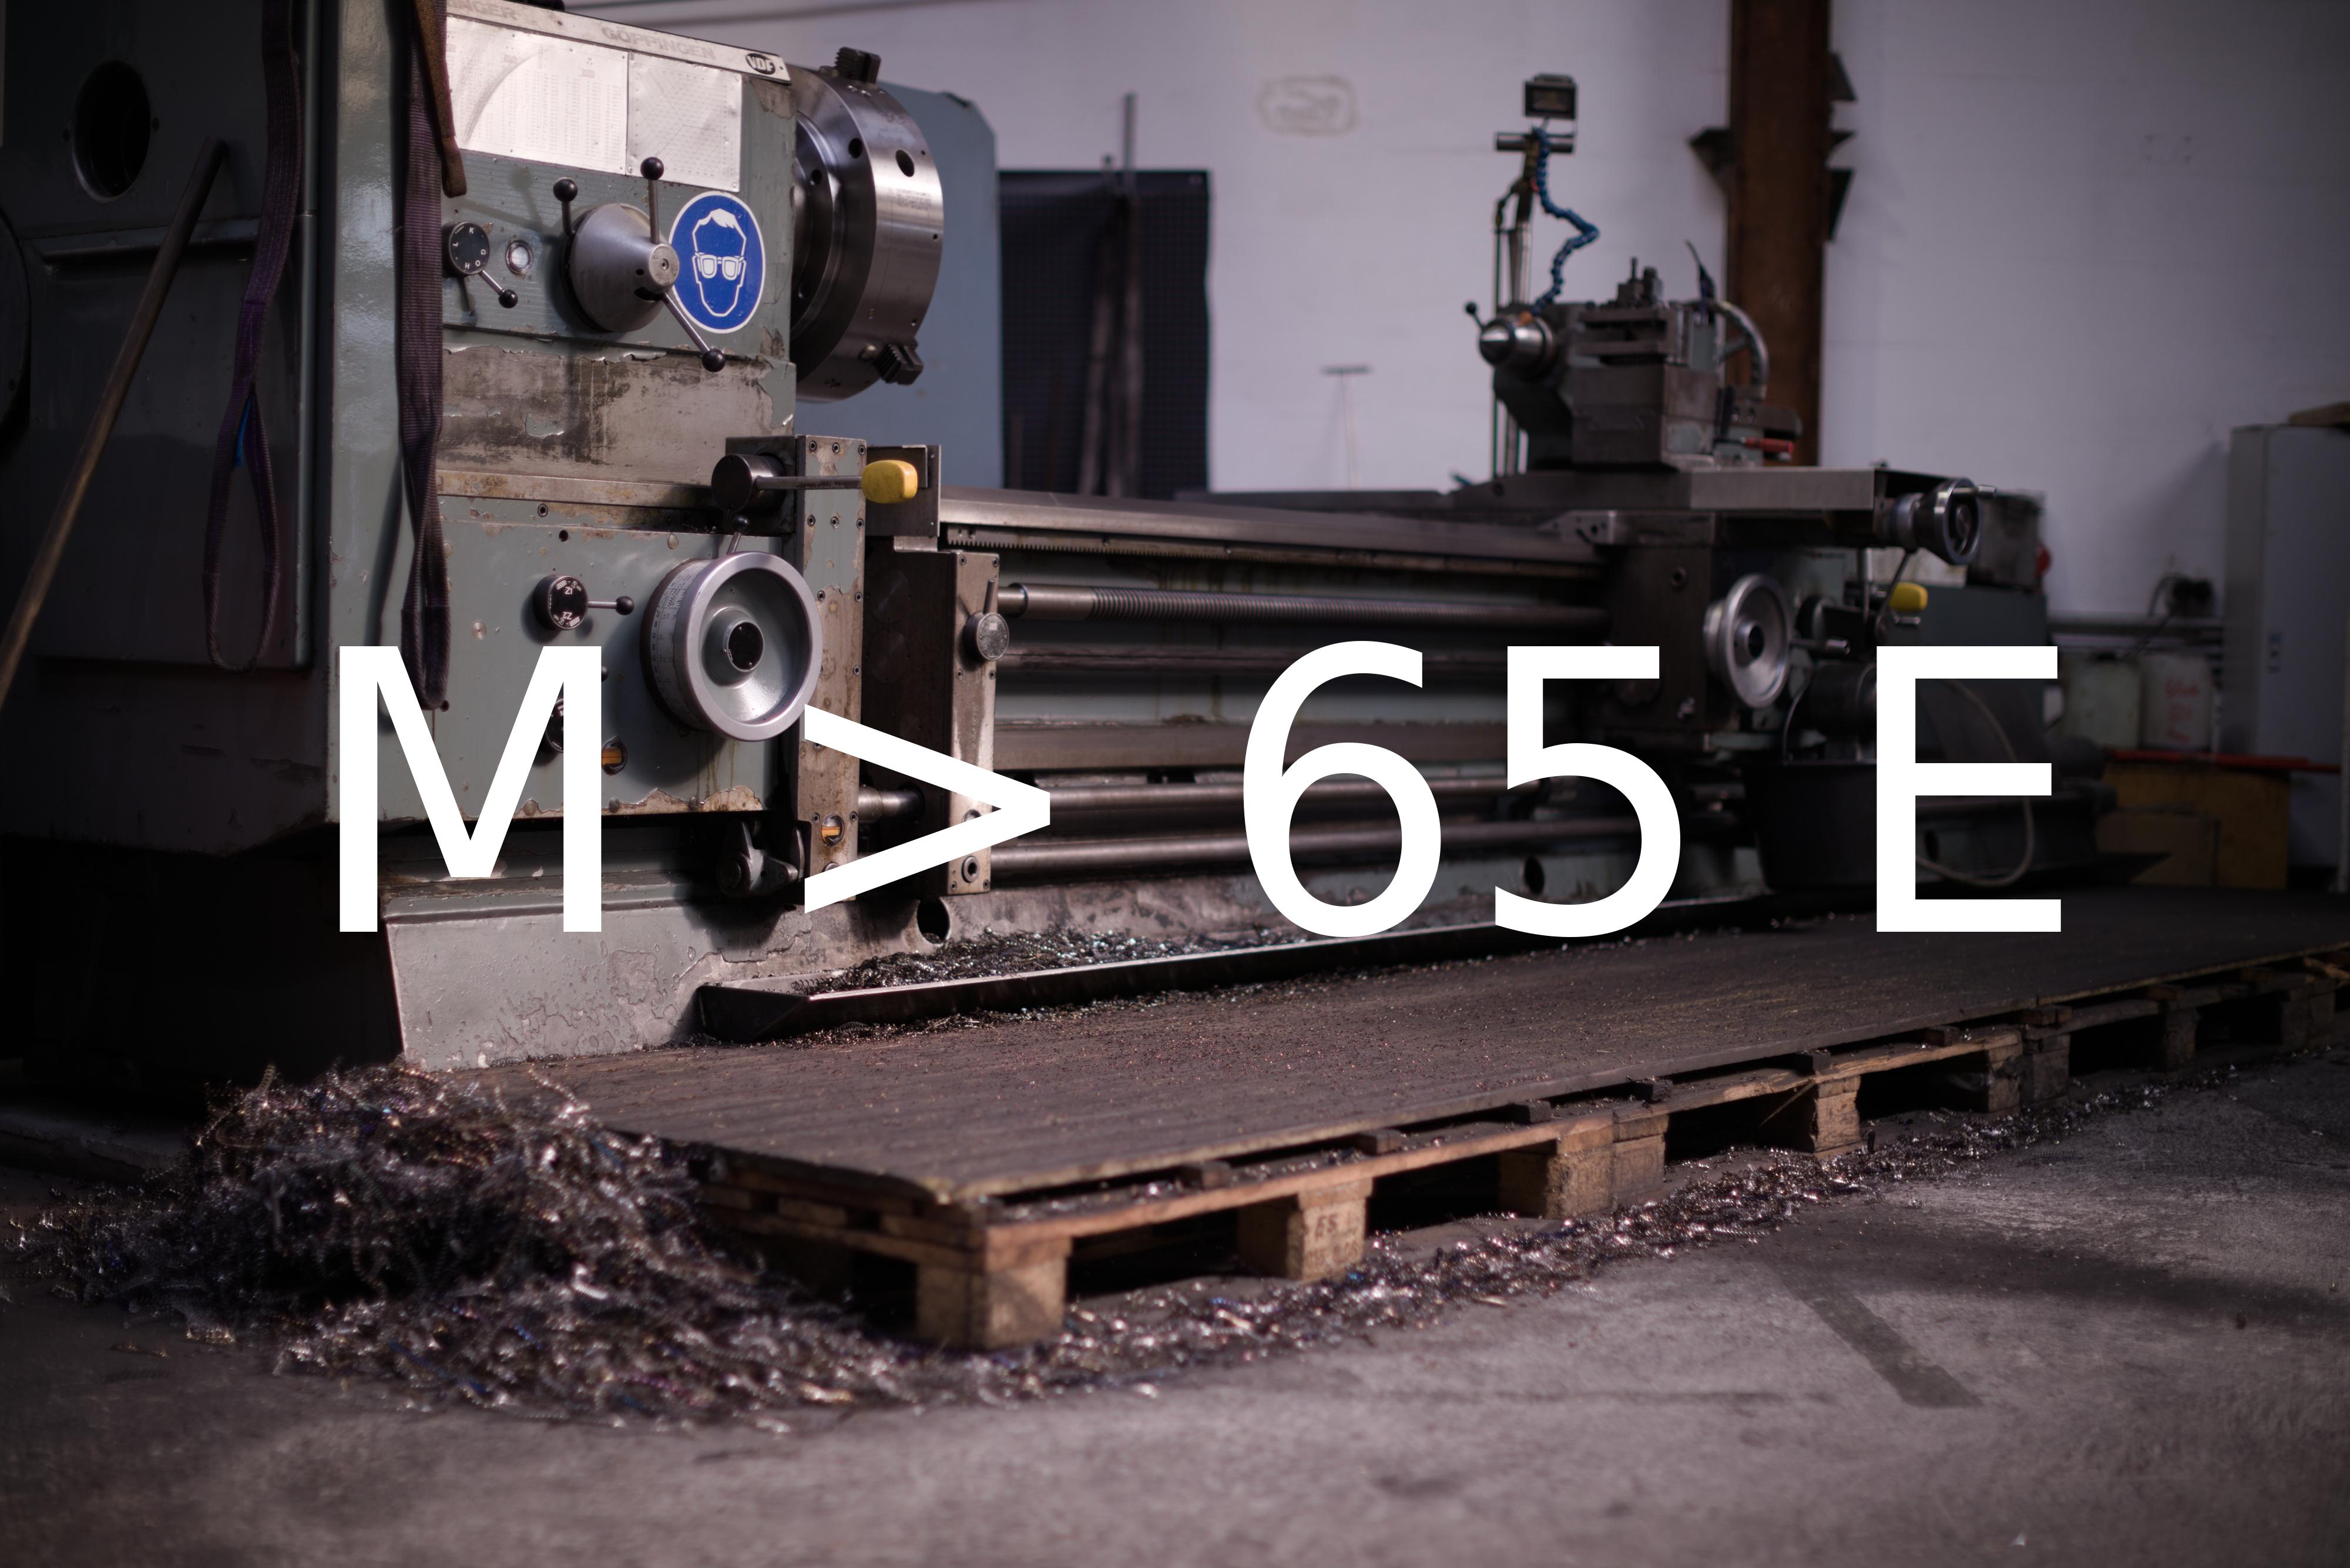 Steel Material: M > 65 E